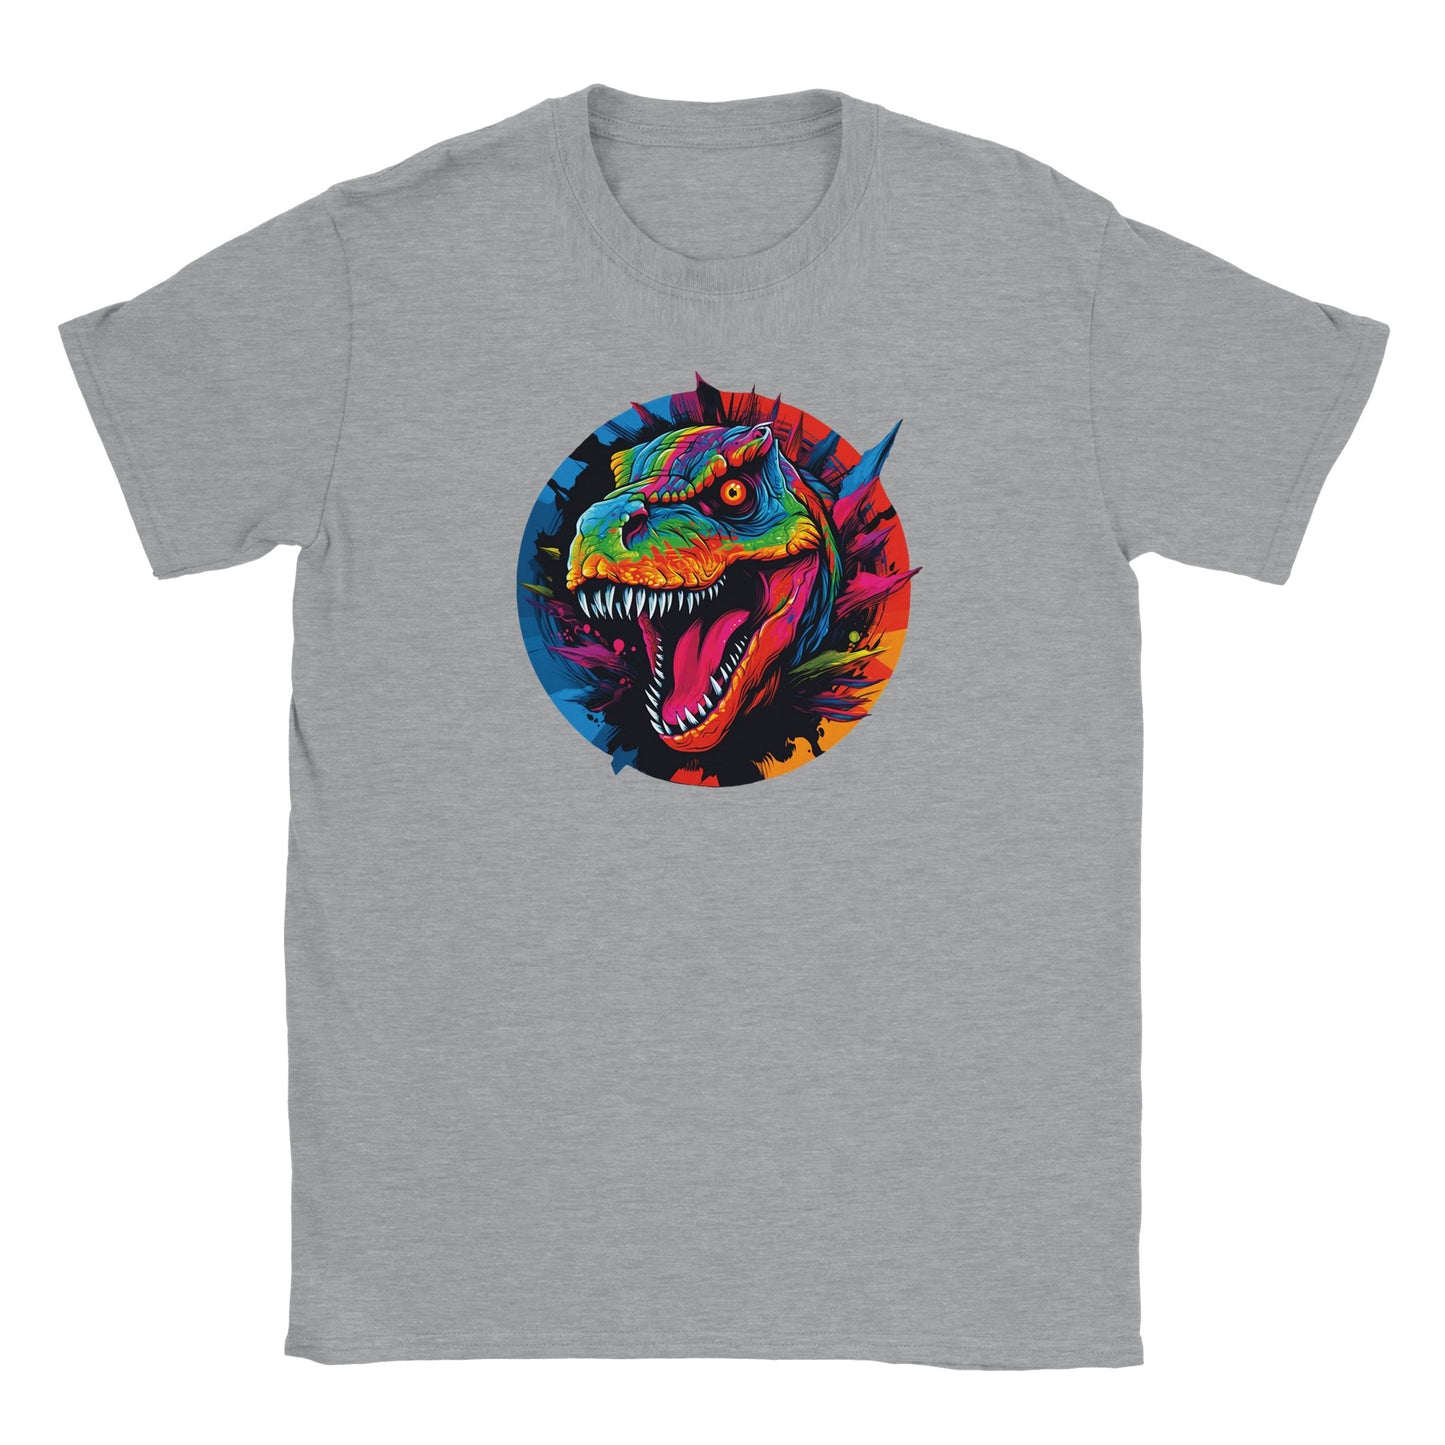 Neon Dino Kids Crewneck T-shirt - Mister Snarky's